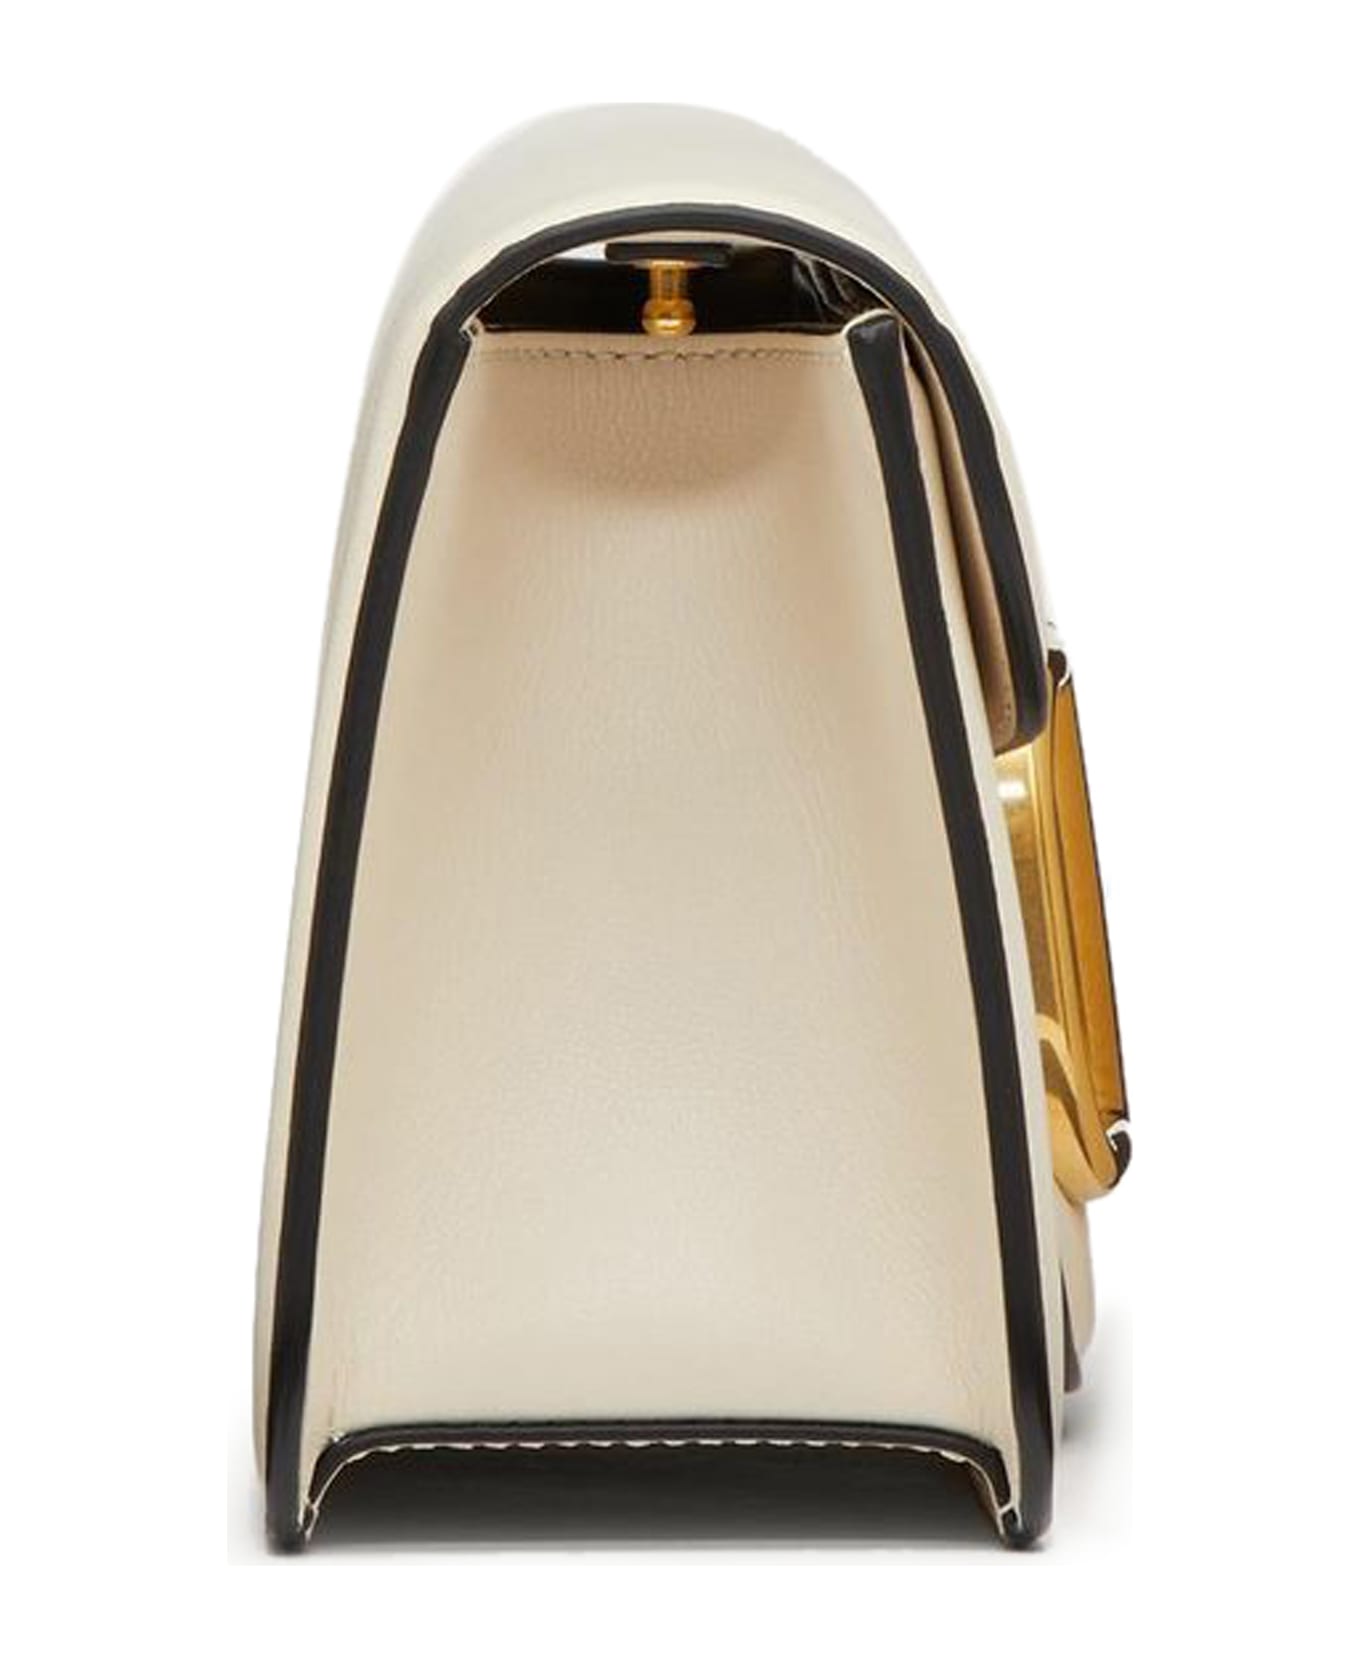 Valentino Garavani Shoulder Bag Loco` Vitello/antique Brass Logo - Light Ivory